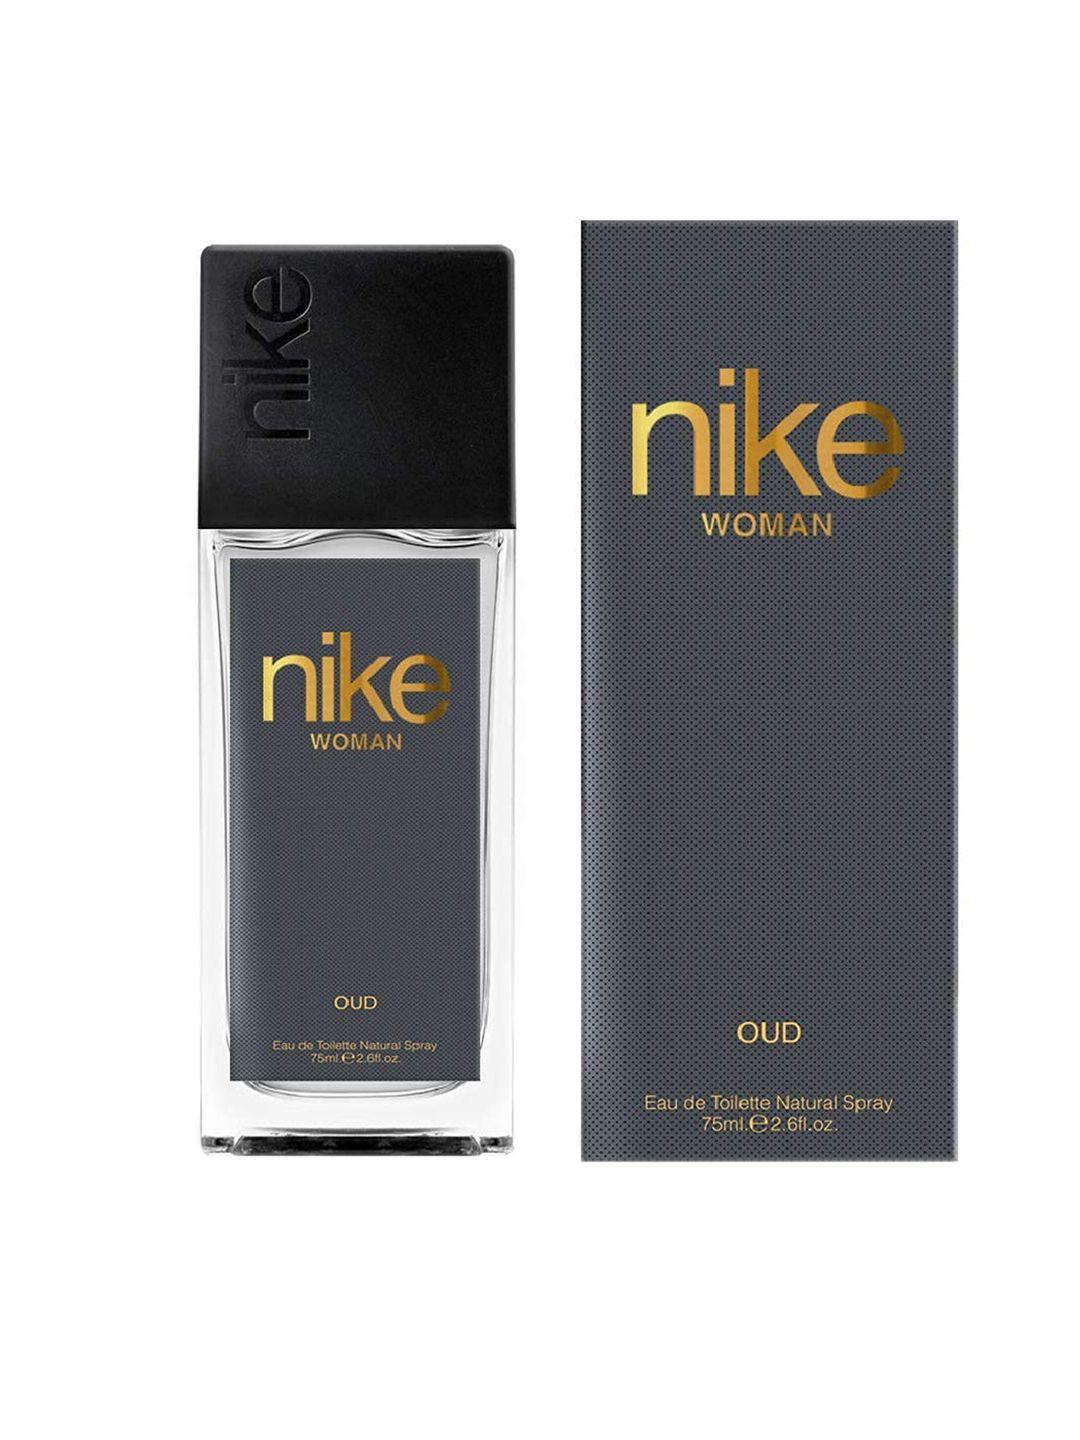 nike-woman-oud-eau-de-toilette-natural-spray--75ml